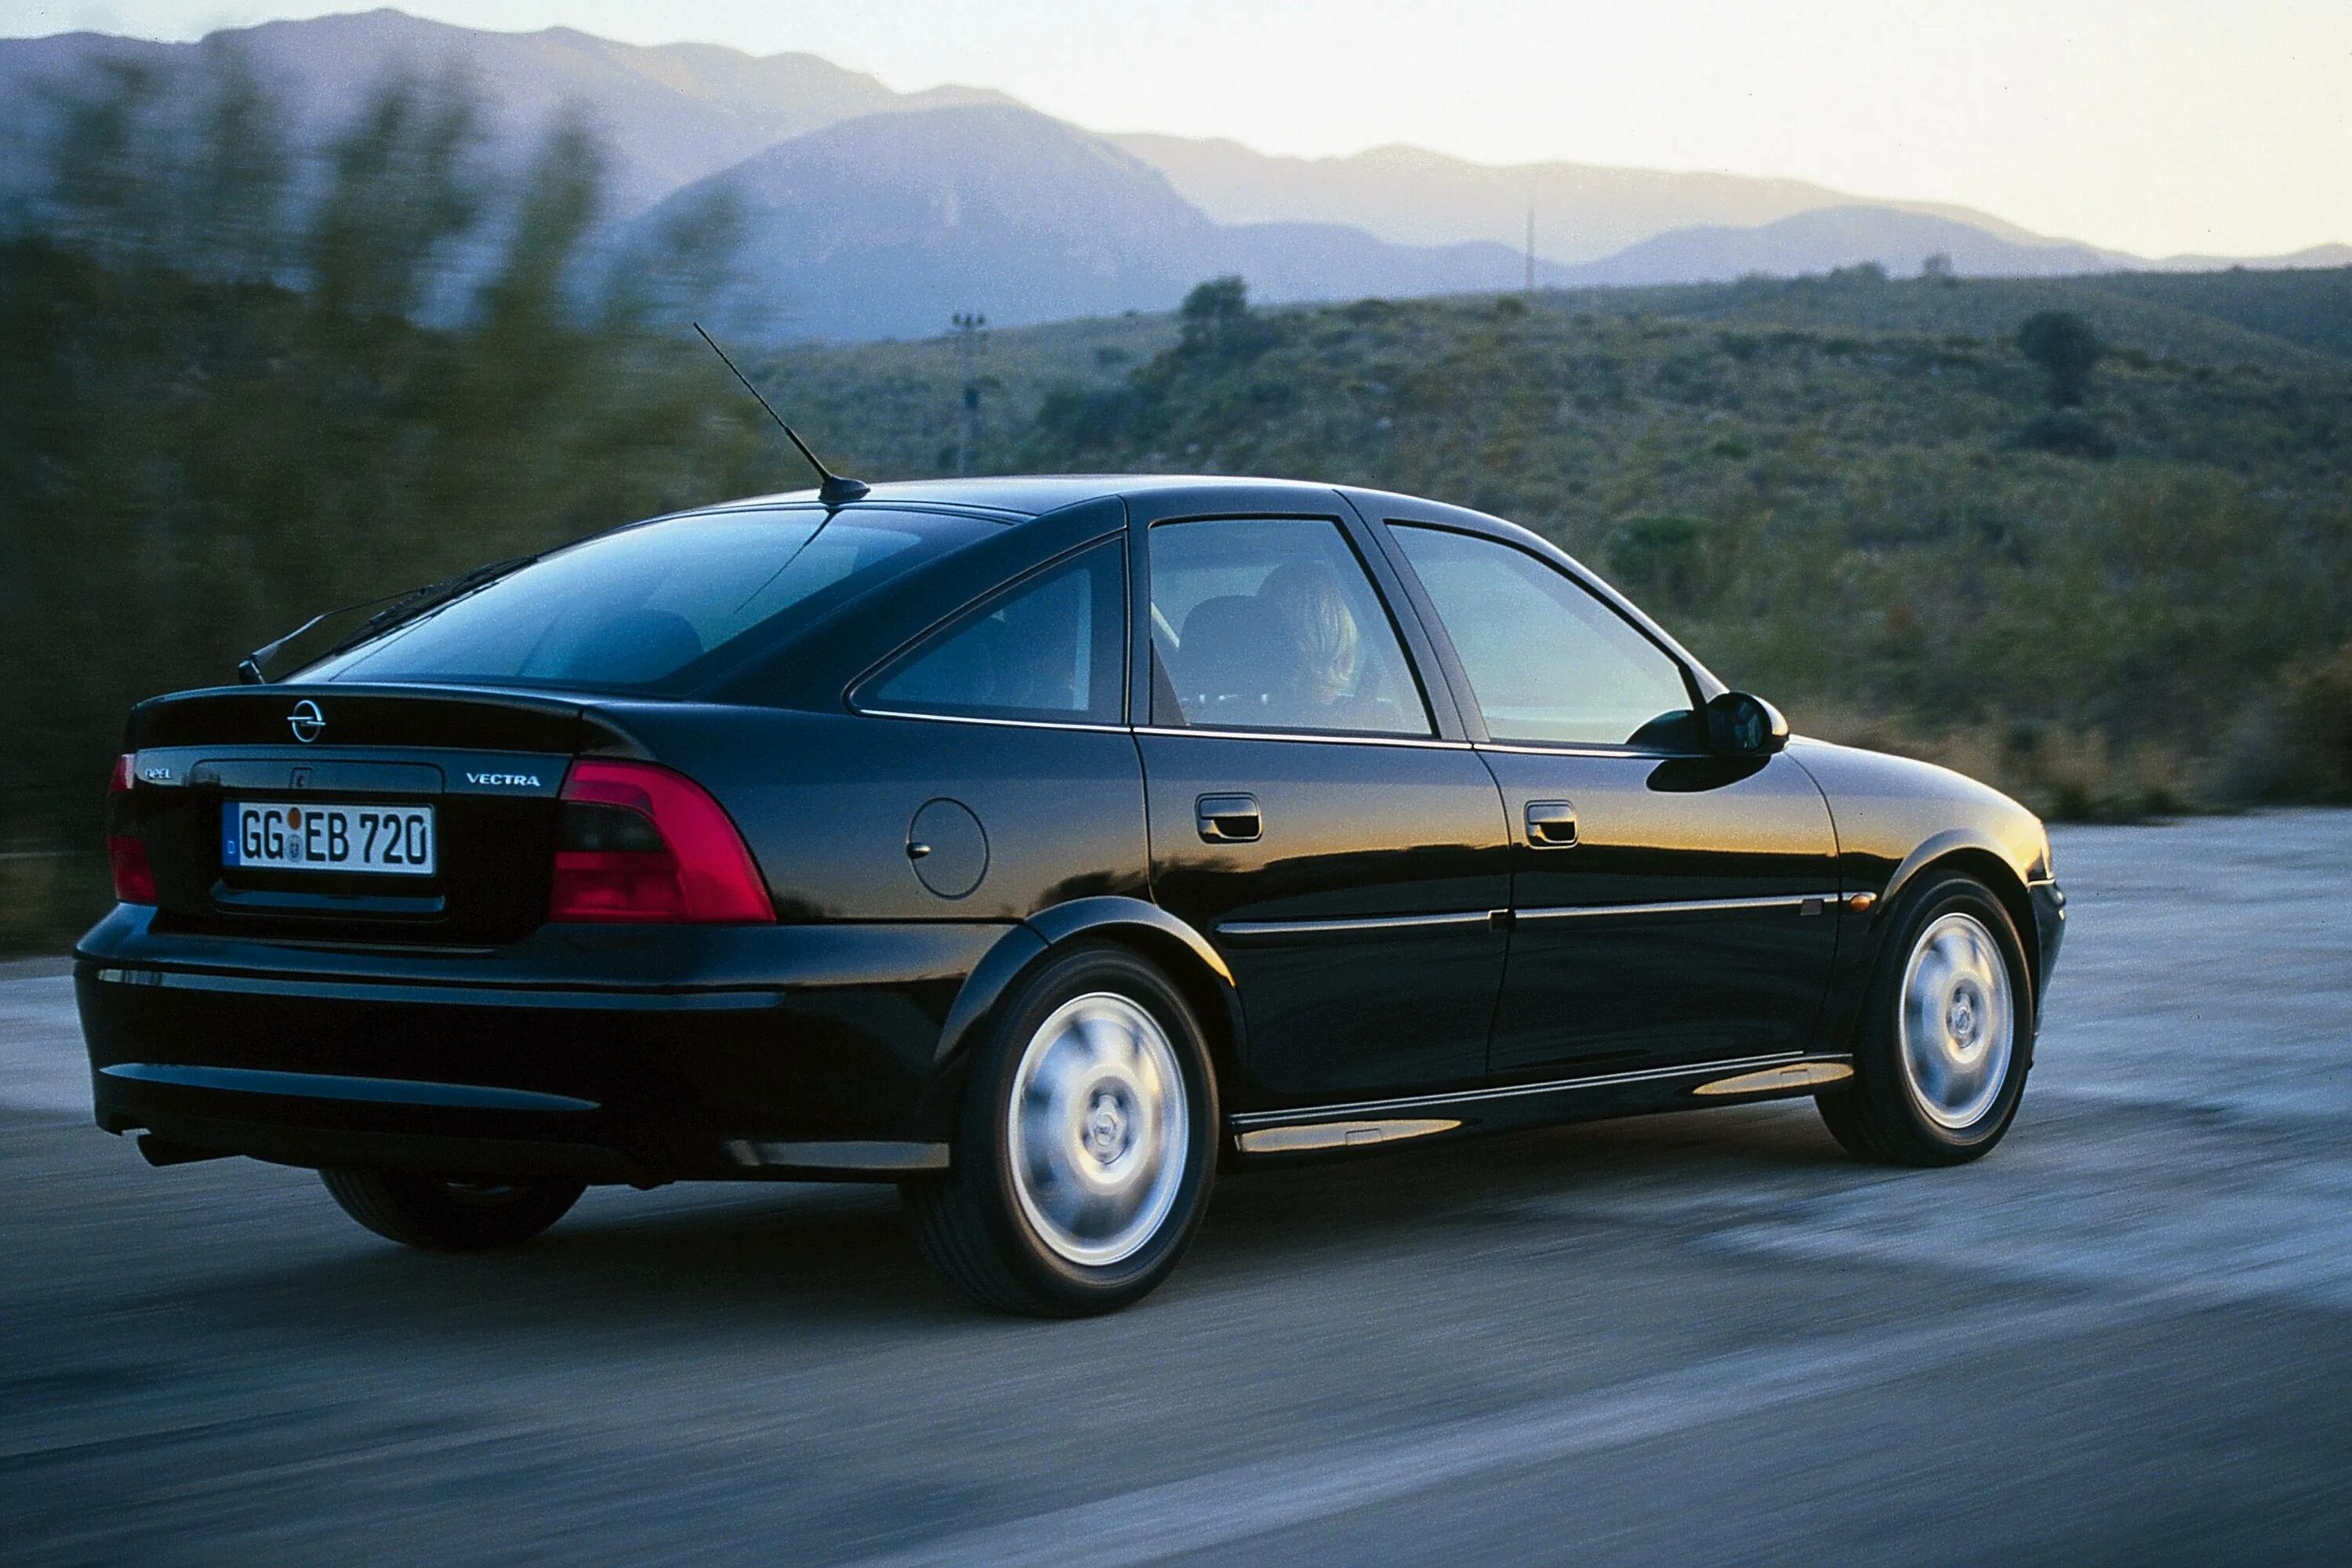 Opel Vectra b. Opel Vectra b 1999. Opel Vectra 2.4. Opel Vectra 1999. Свет опель вектра б